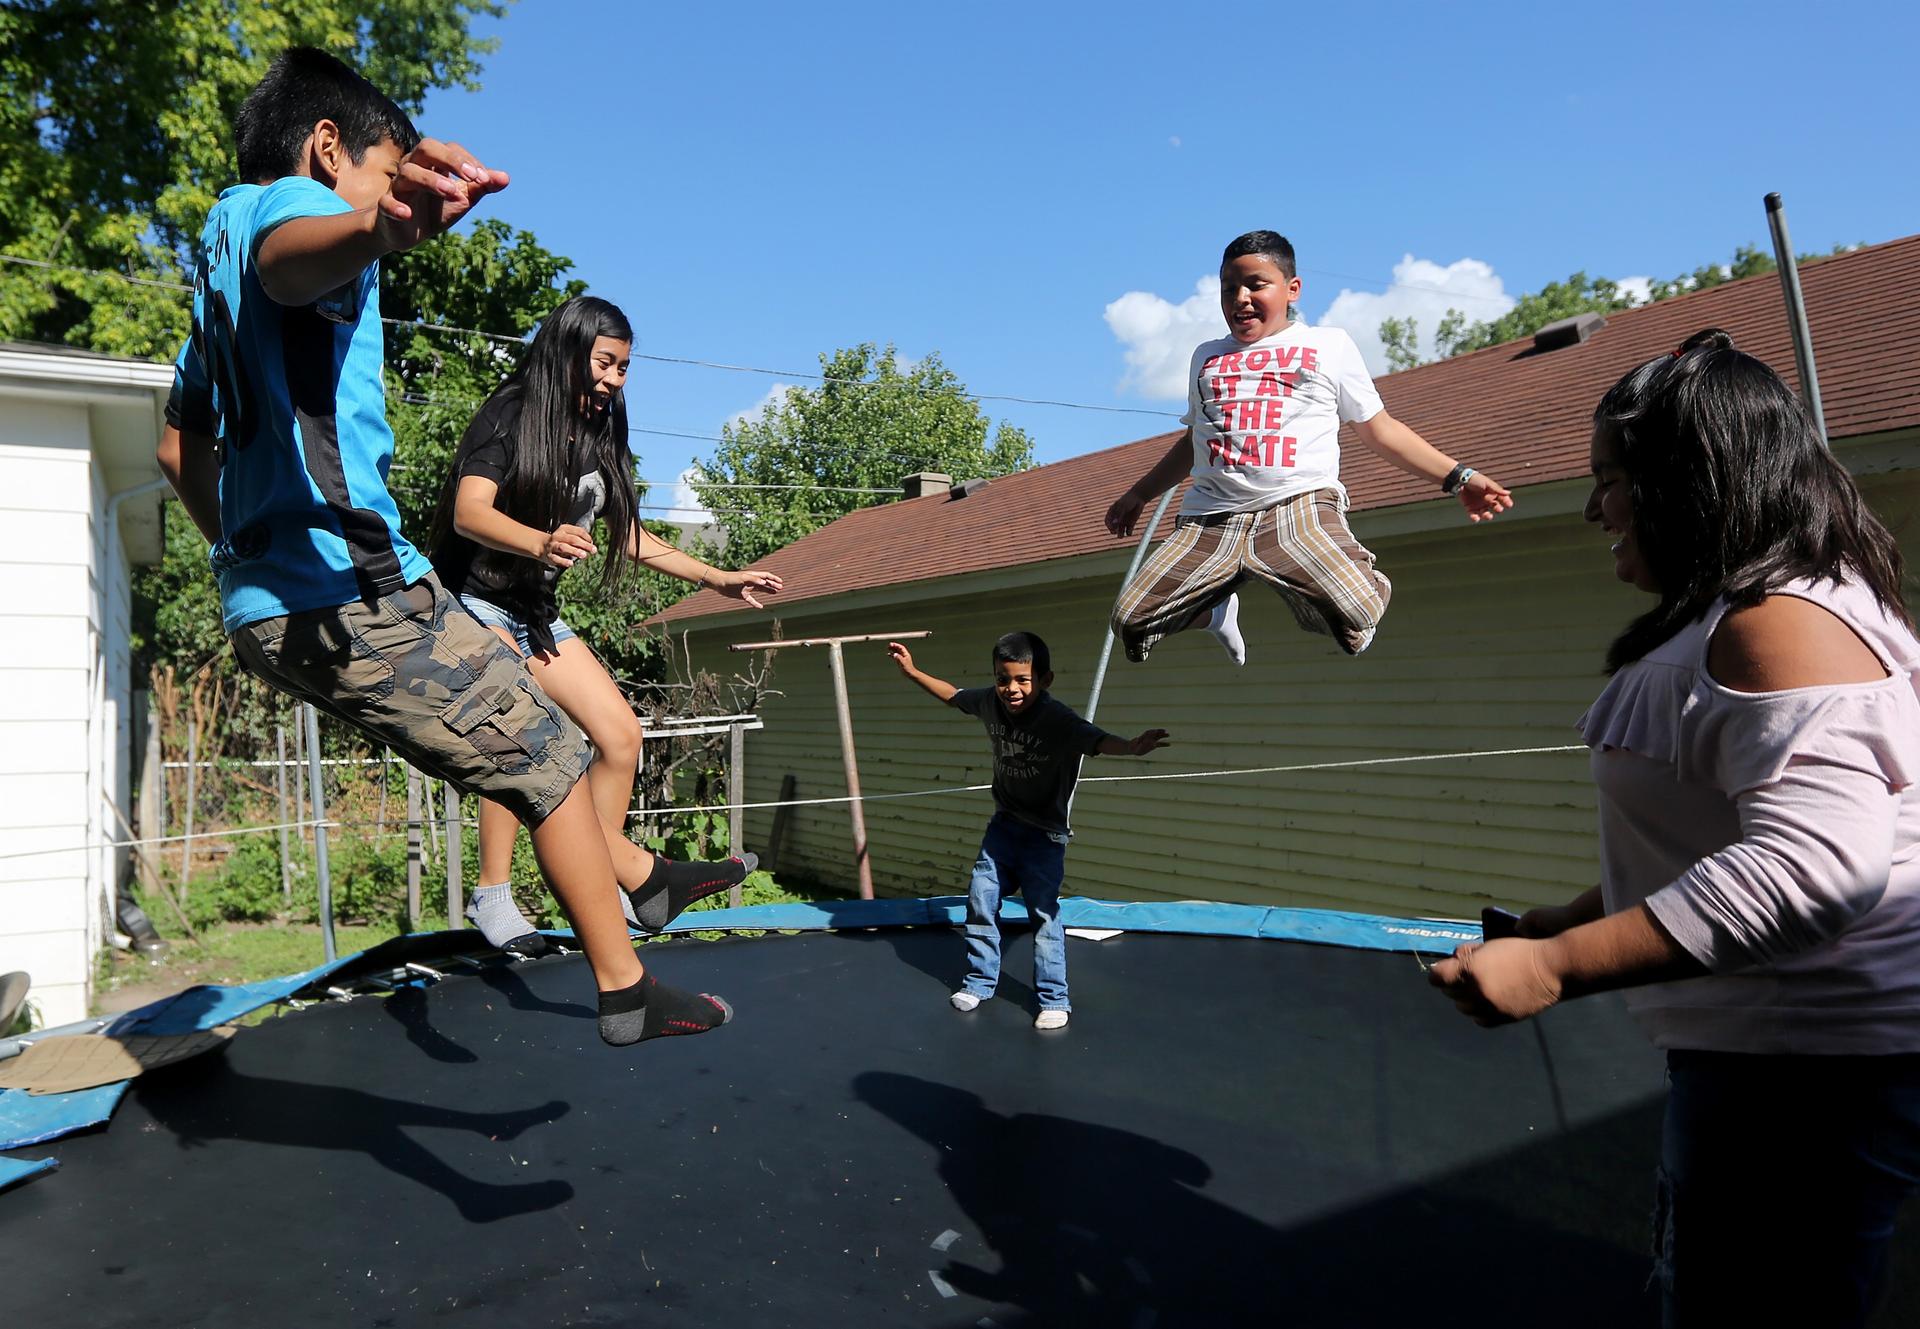 Children jump on trampoline outdoors